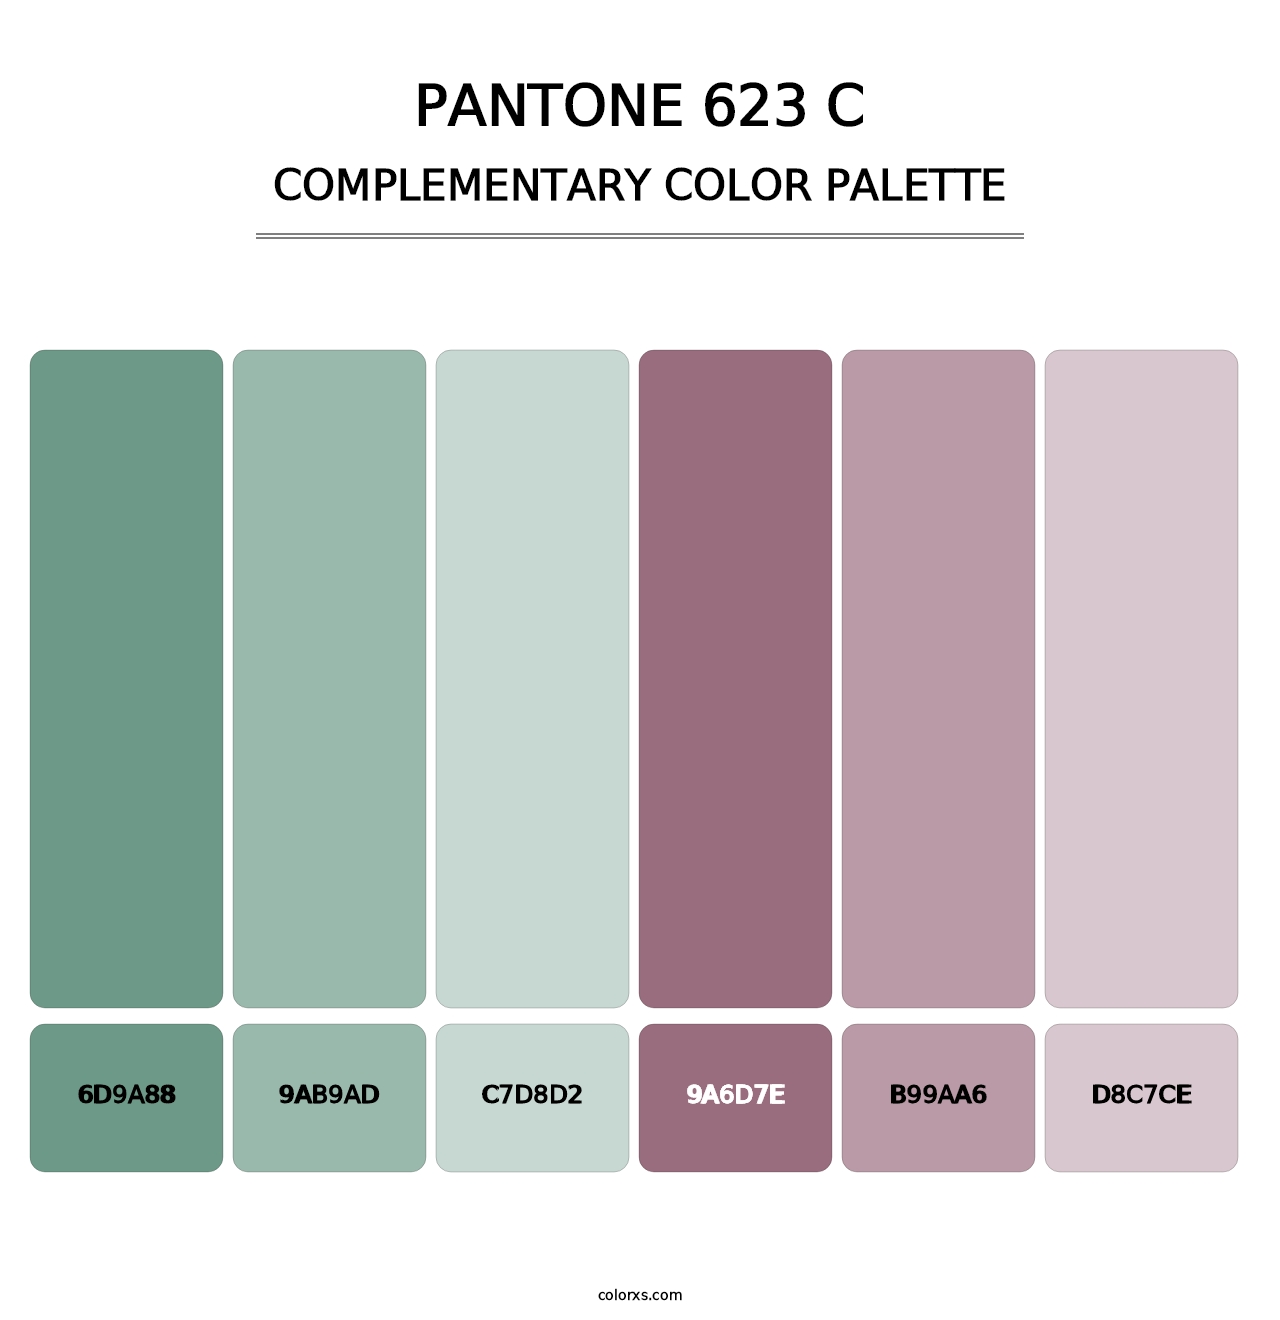 PANTONE 623 C - Complementary Color Palette